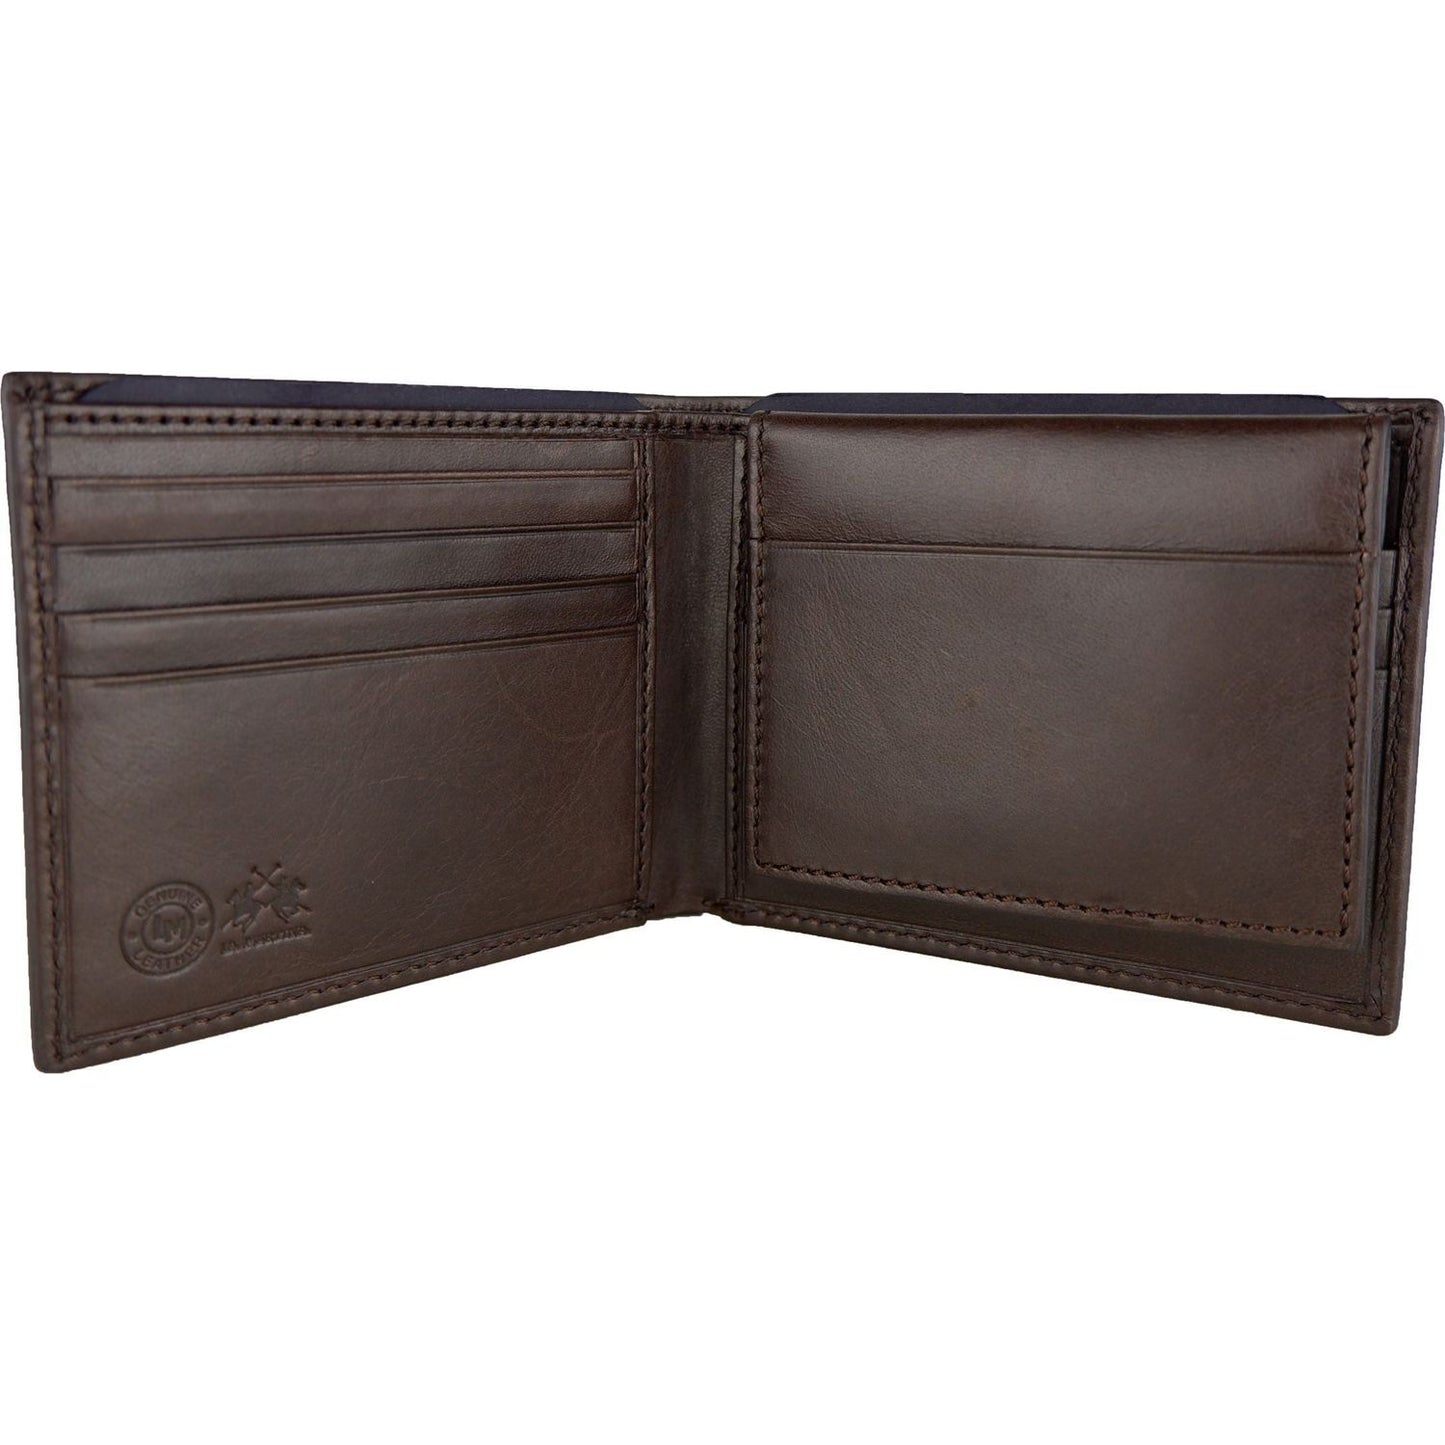 La Martina Elegant Dark Brown Leather Wallet la-martina-wallet-3 MAN WALLETS product-6700-179113089-scaled-00e4be66-fe5.jpg